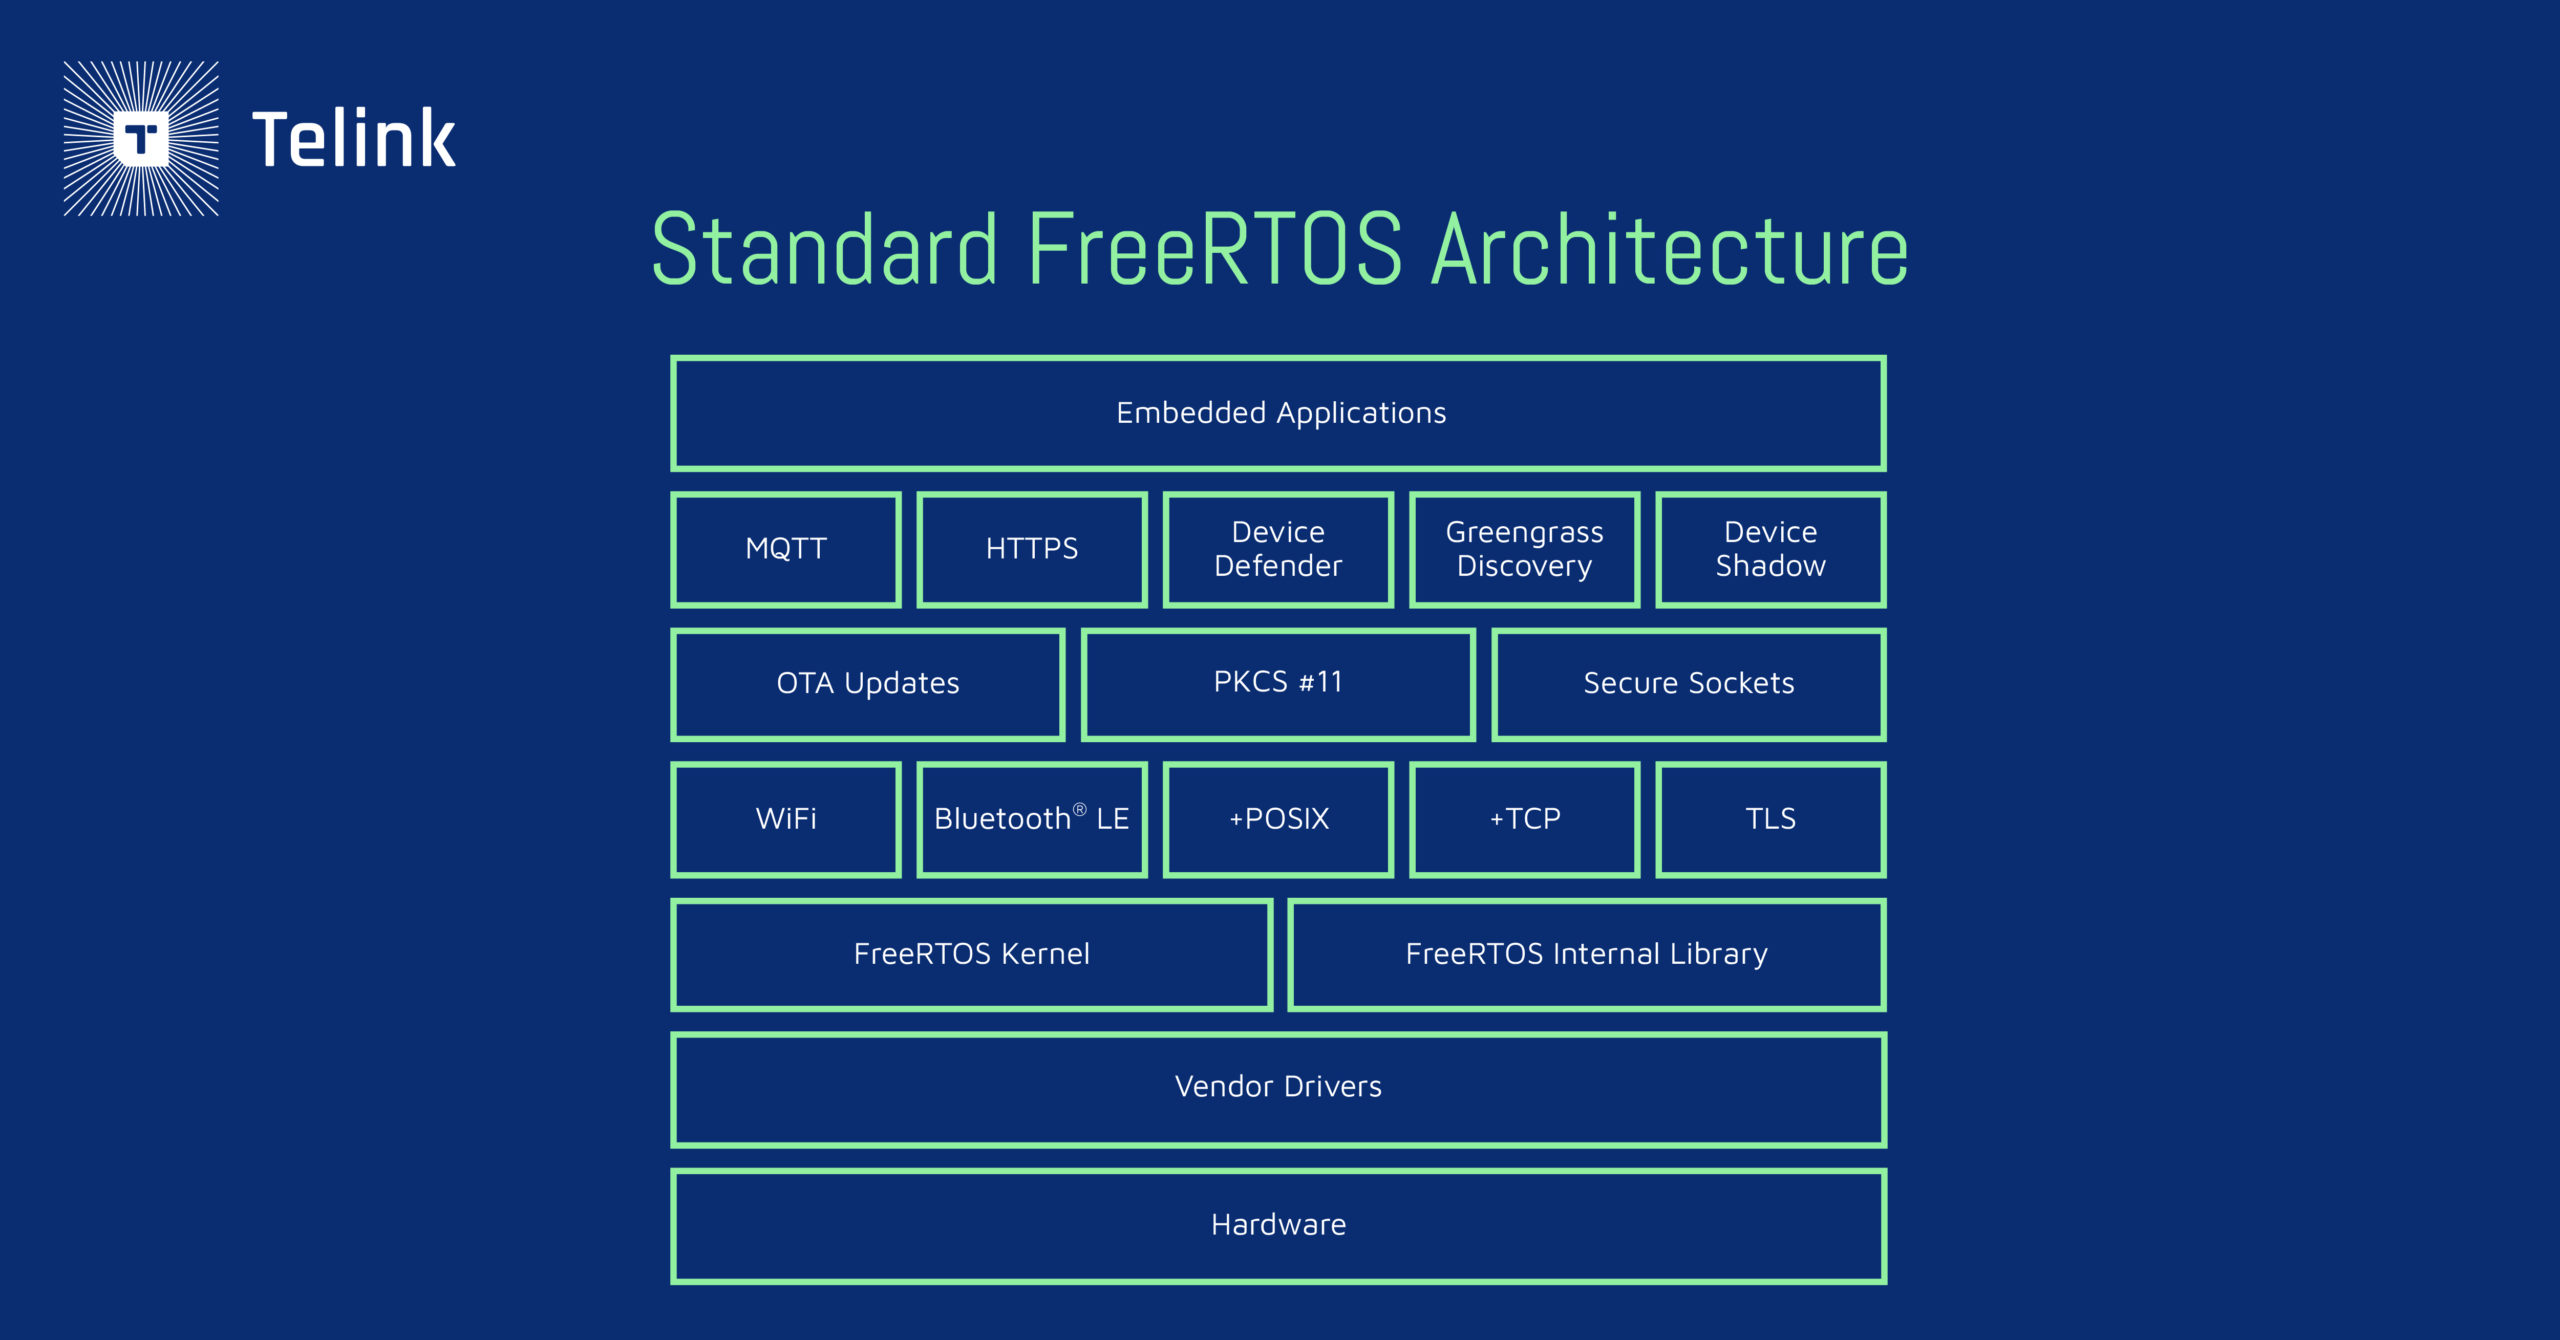 Standard FreeRTOS Architecture